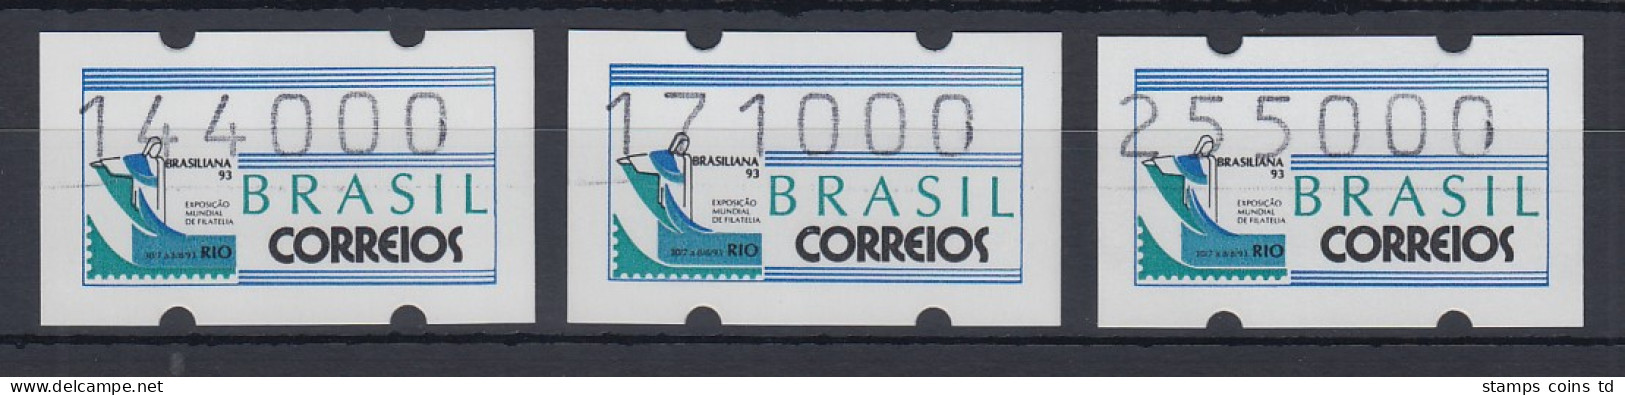 Brasilien Klüssendorf-ATM 1993 BRASILIANA Mi-Nr 5 Satz 144000-171000-255000 ** - Viñetas De Franqueo (Frama)